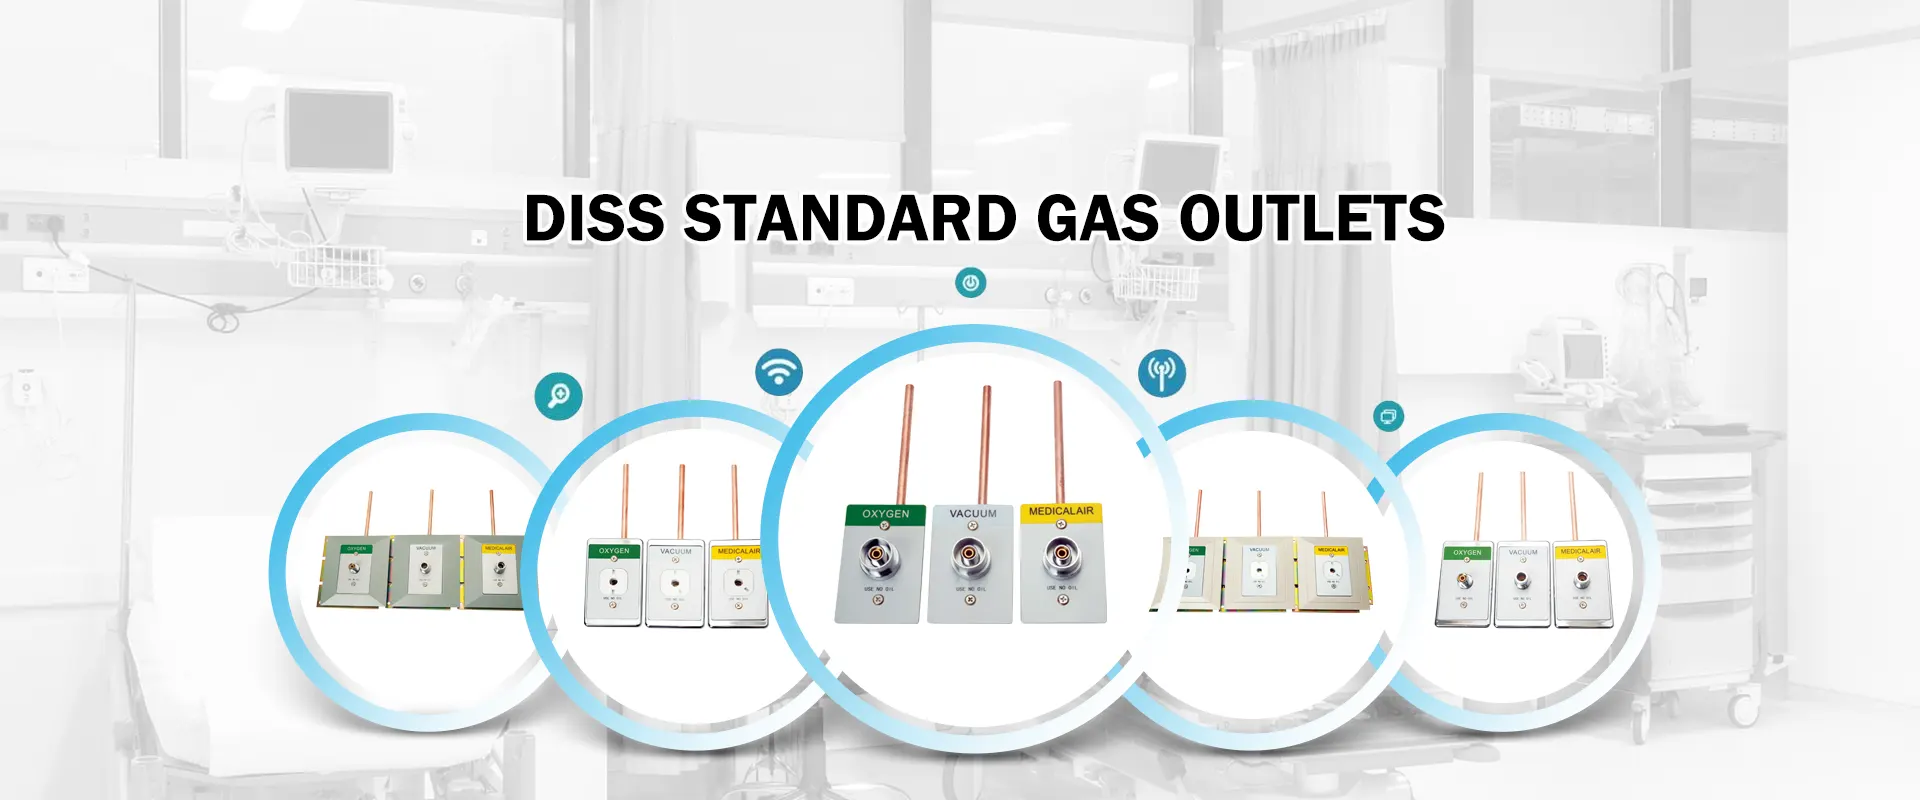 China Diss Standard Gas Outlets များ ထုတ်လုပ်သည်။